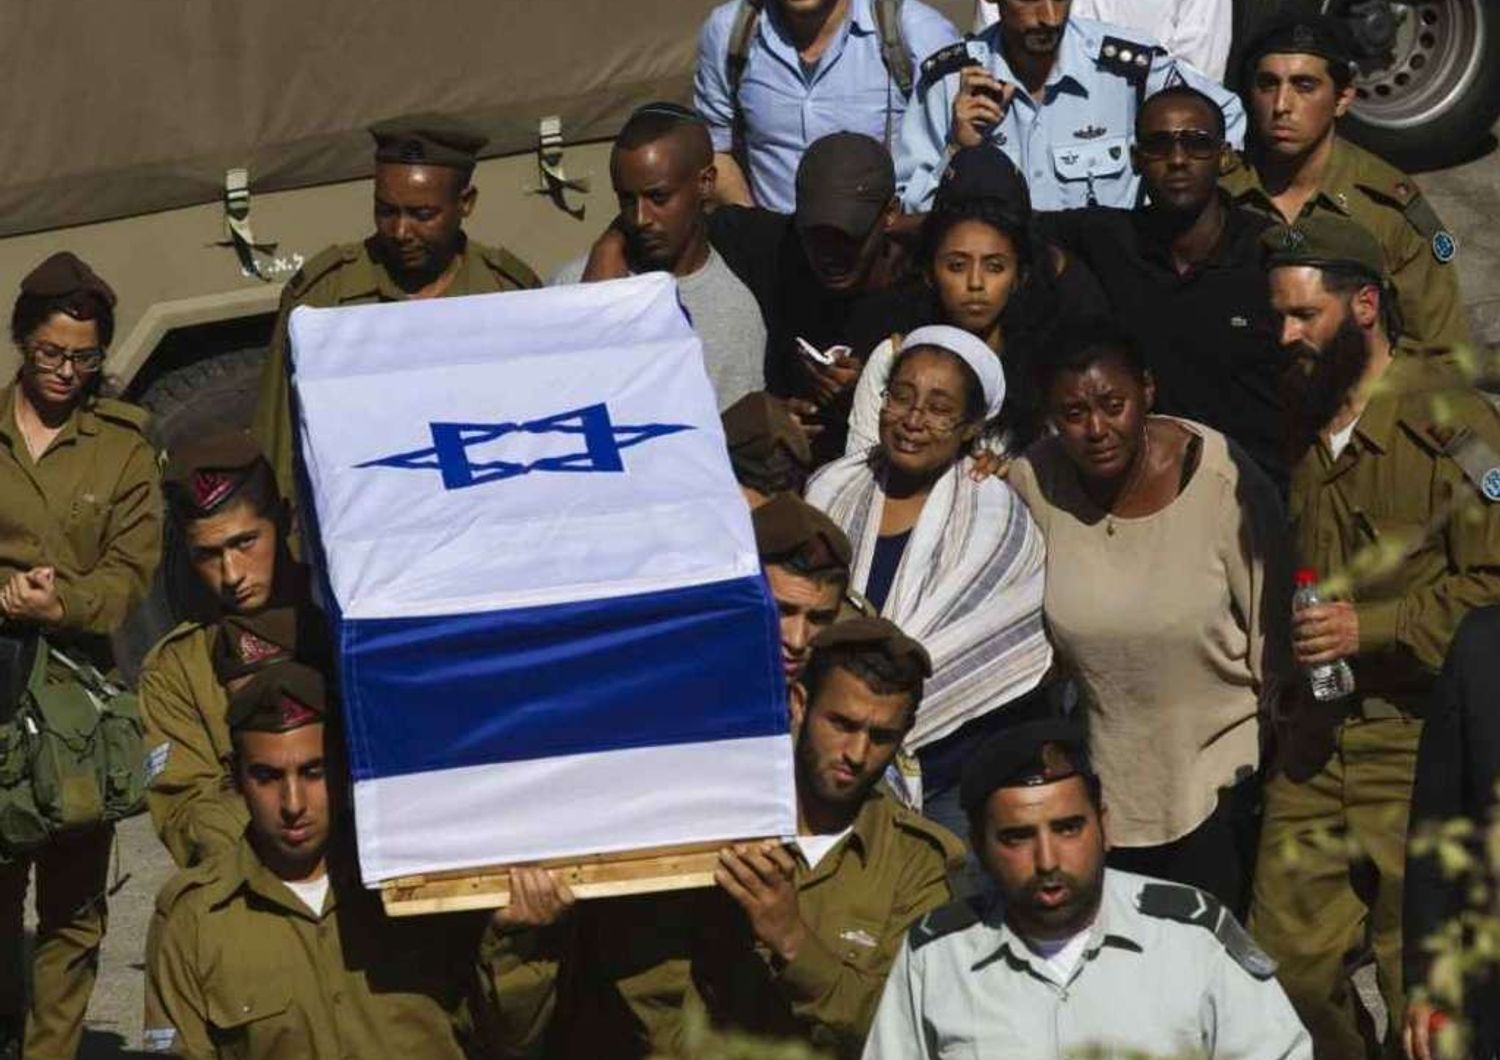 Another seven Israeli soldiers die in Gaza